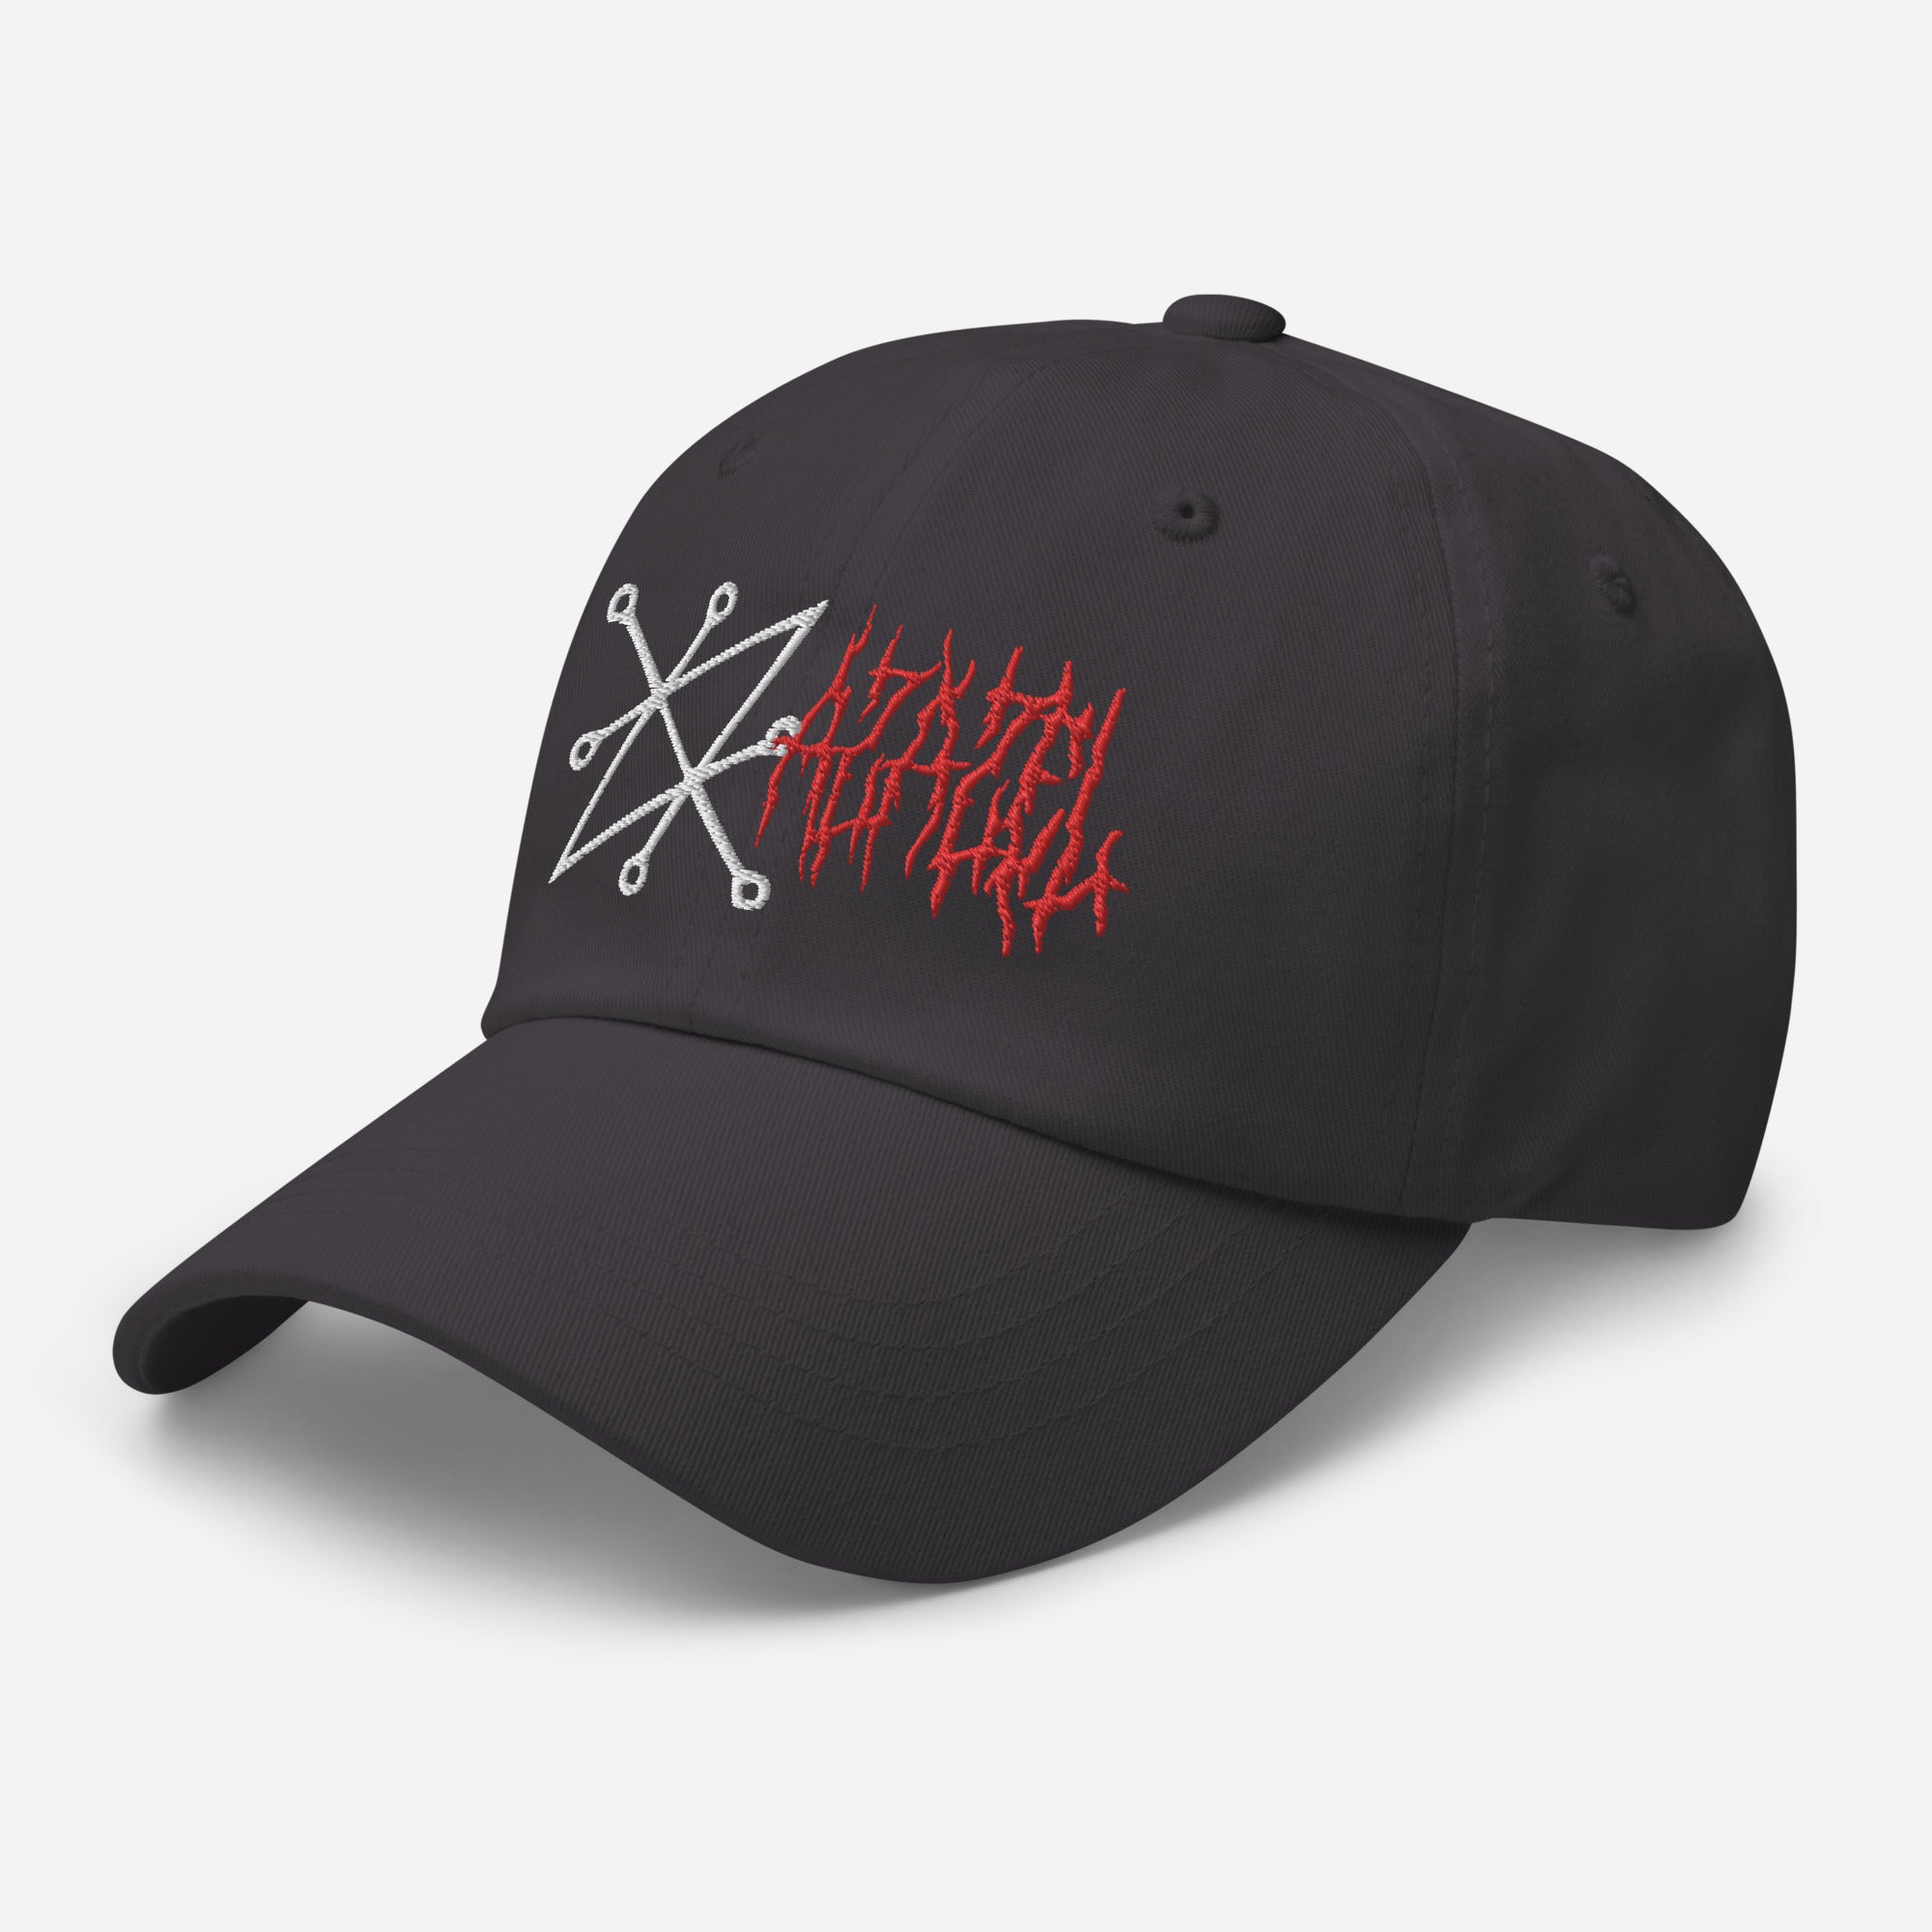 Sigil of Azazel Demon Occult Symbol Embroidered Baseball Cap Dad hat